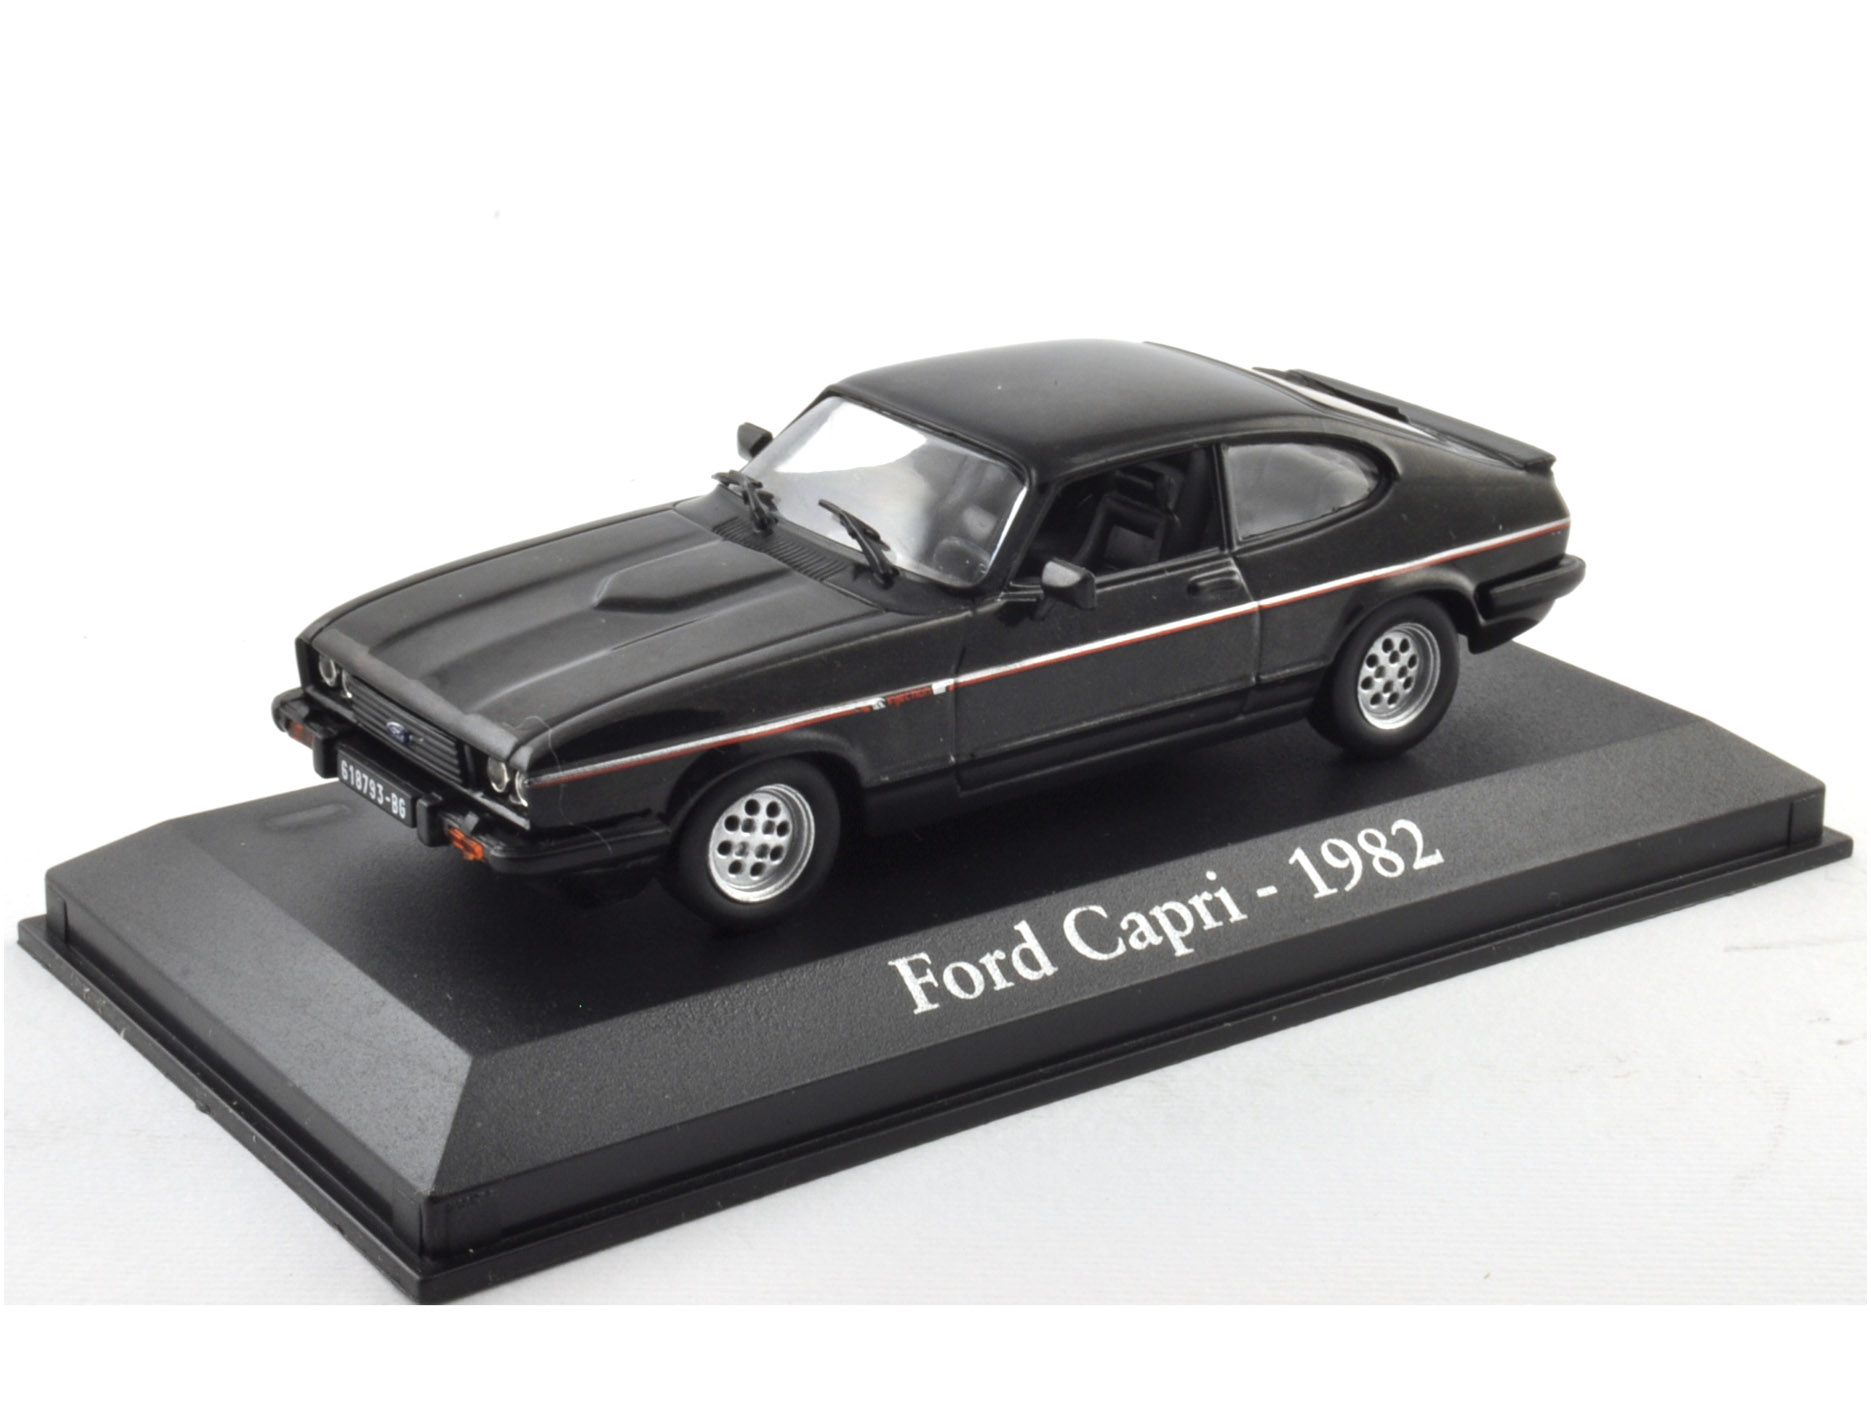 Ford Capri - 1982